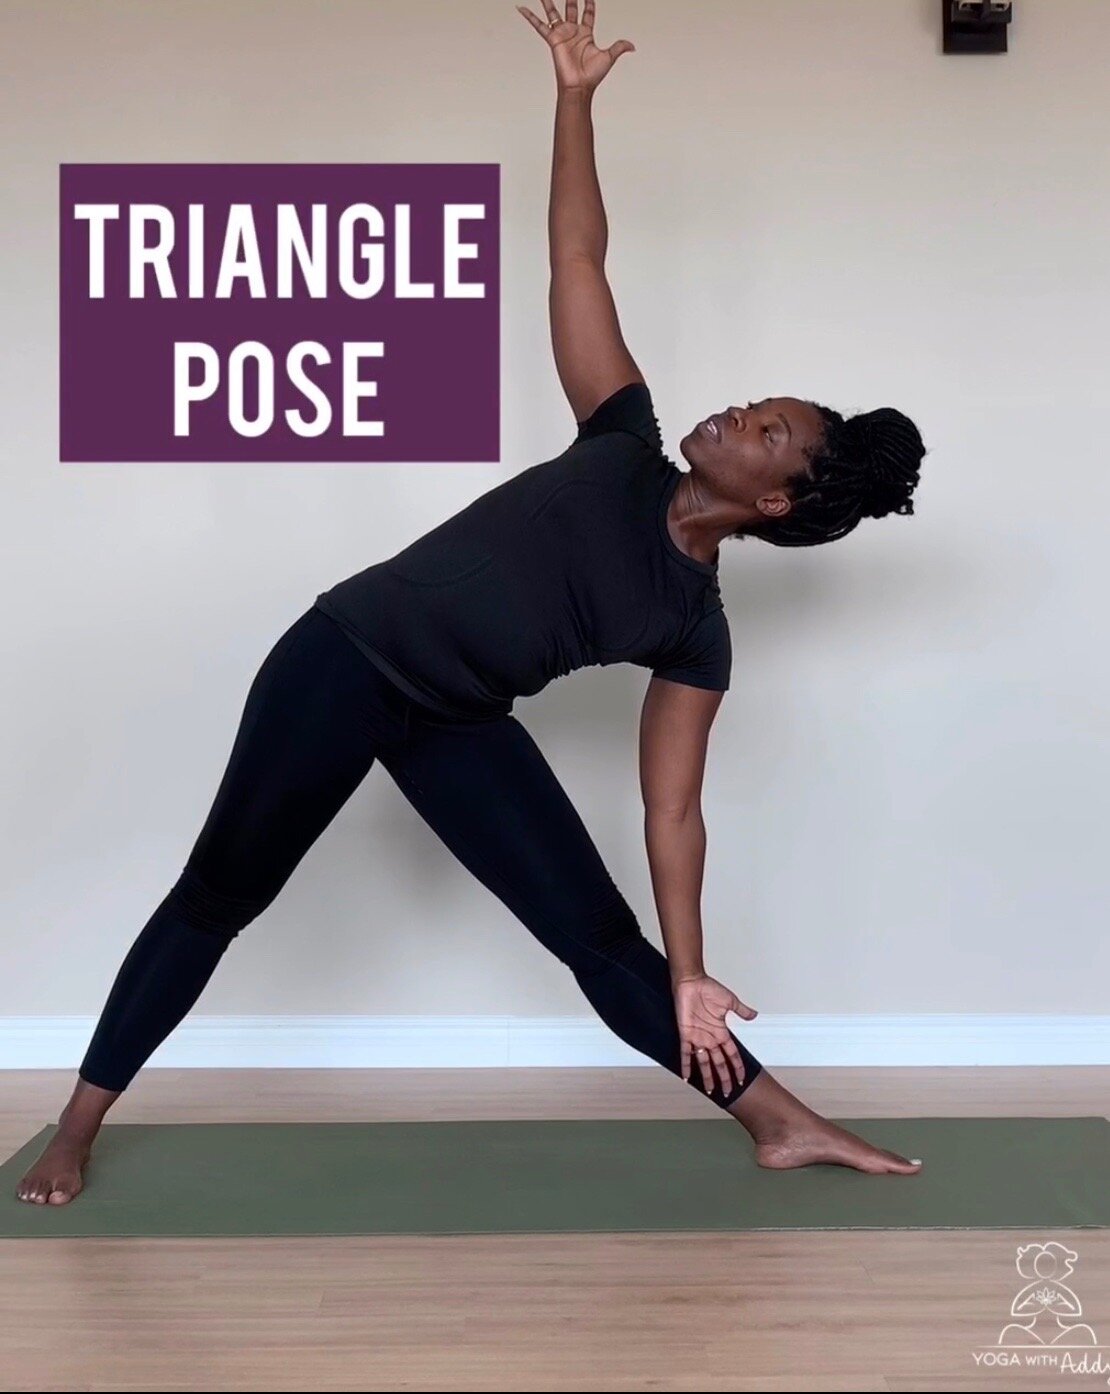 5 beginner yoga poses – Kayla's Five Things